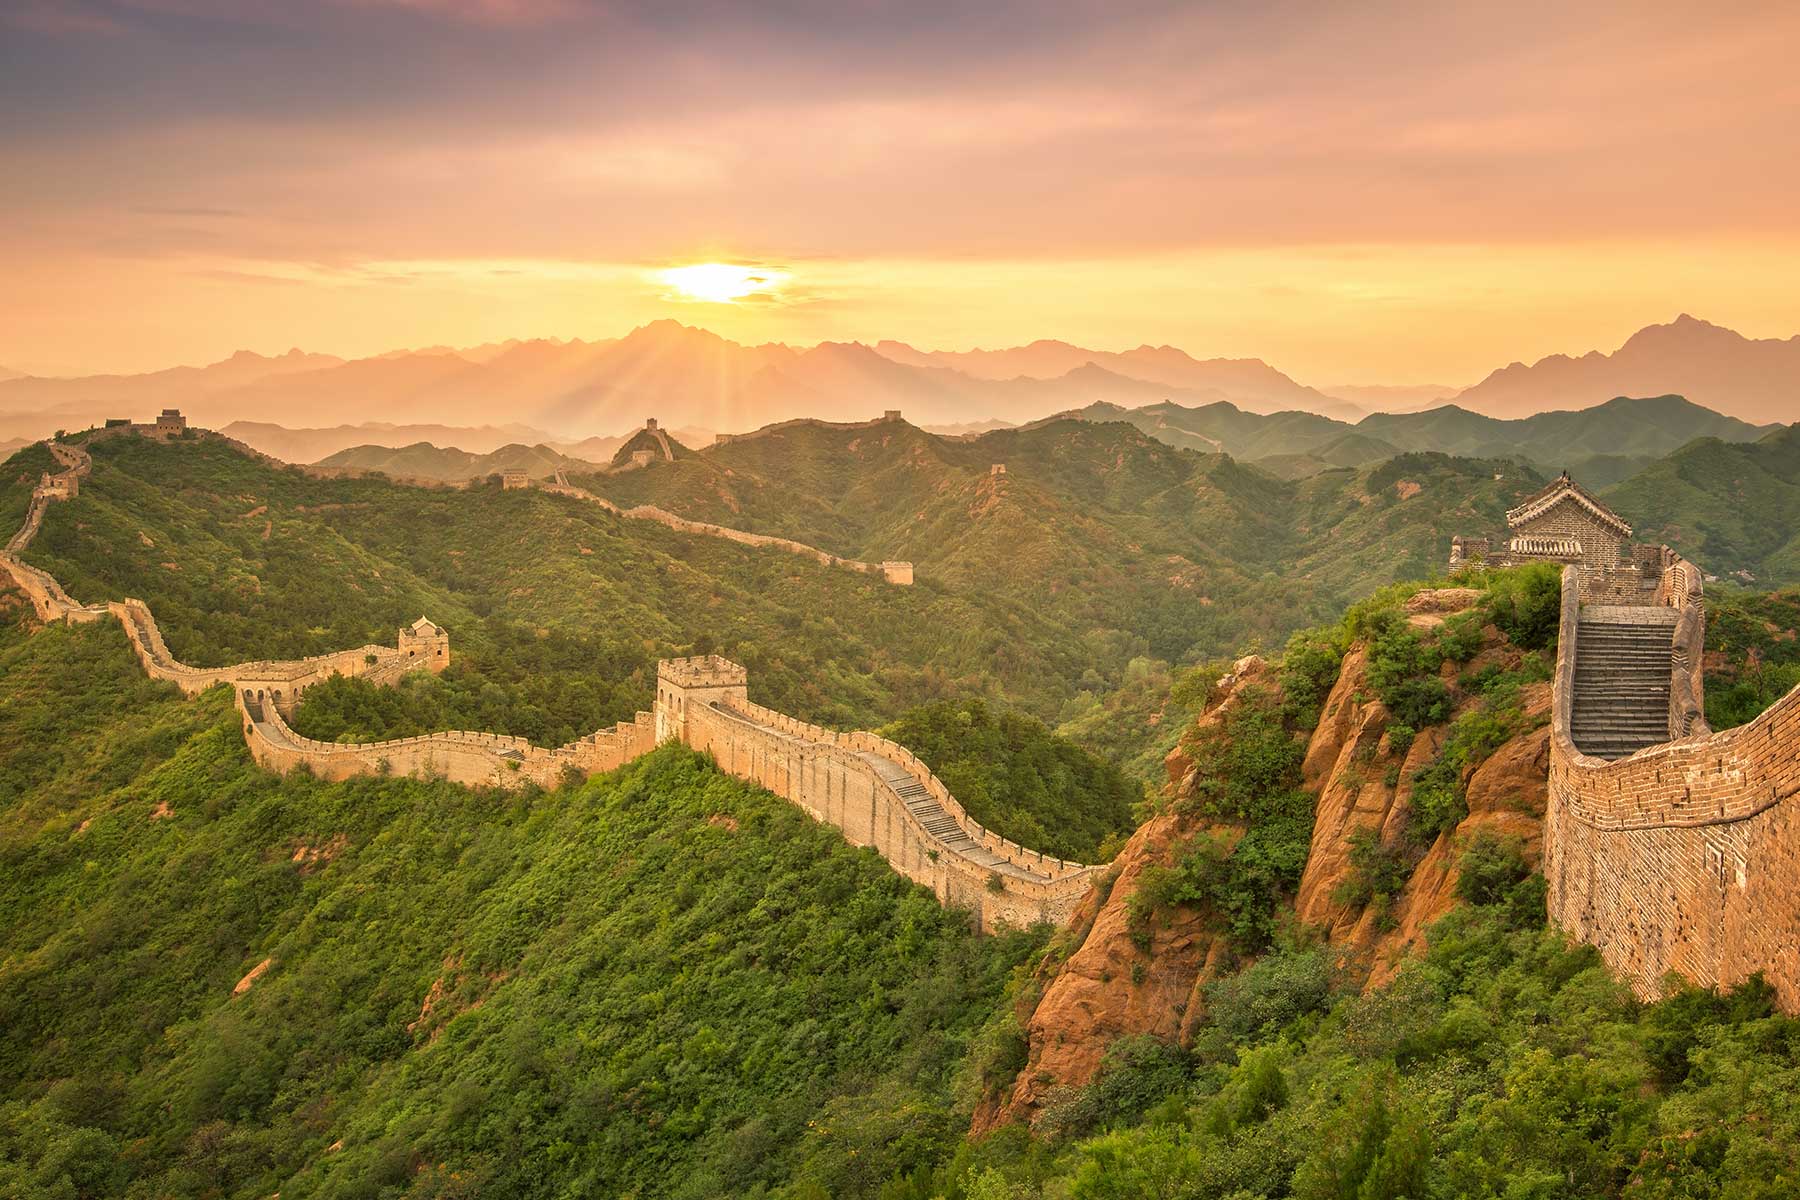 Great Wall of Beijing